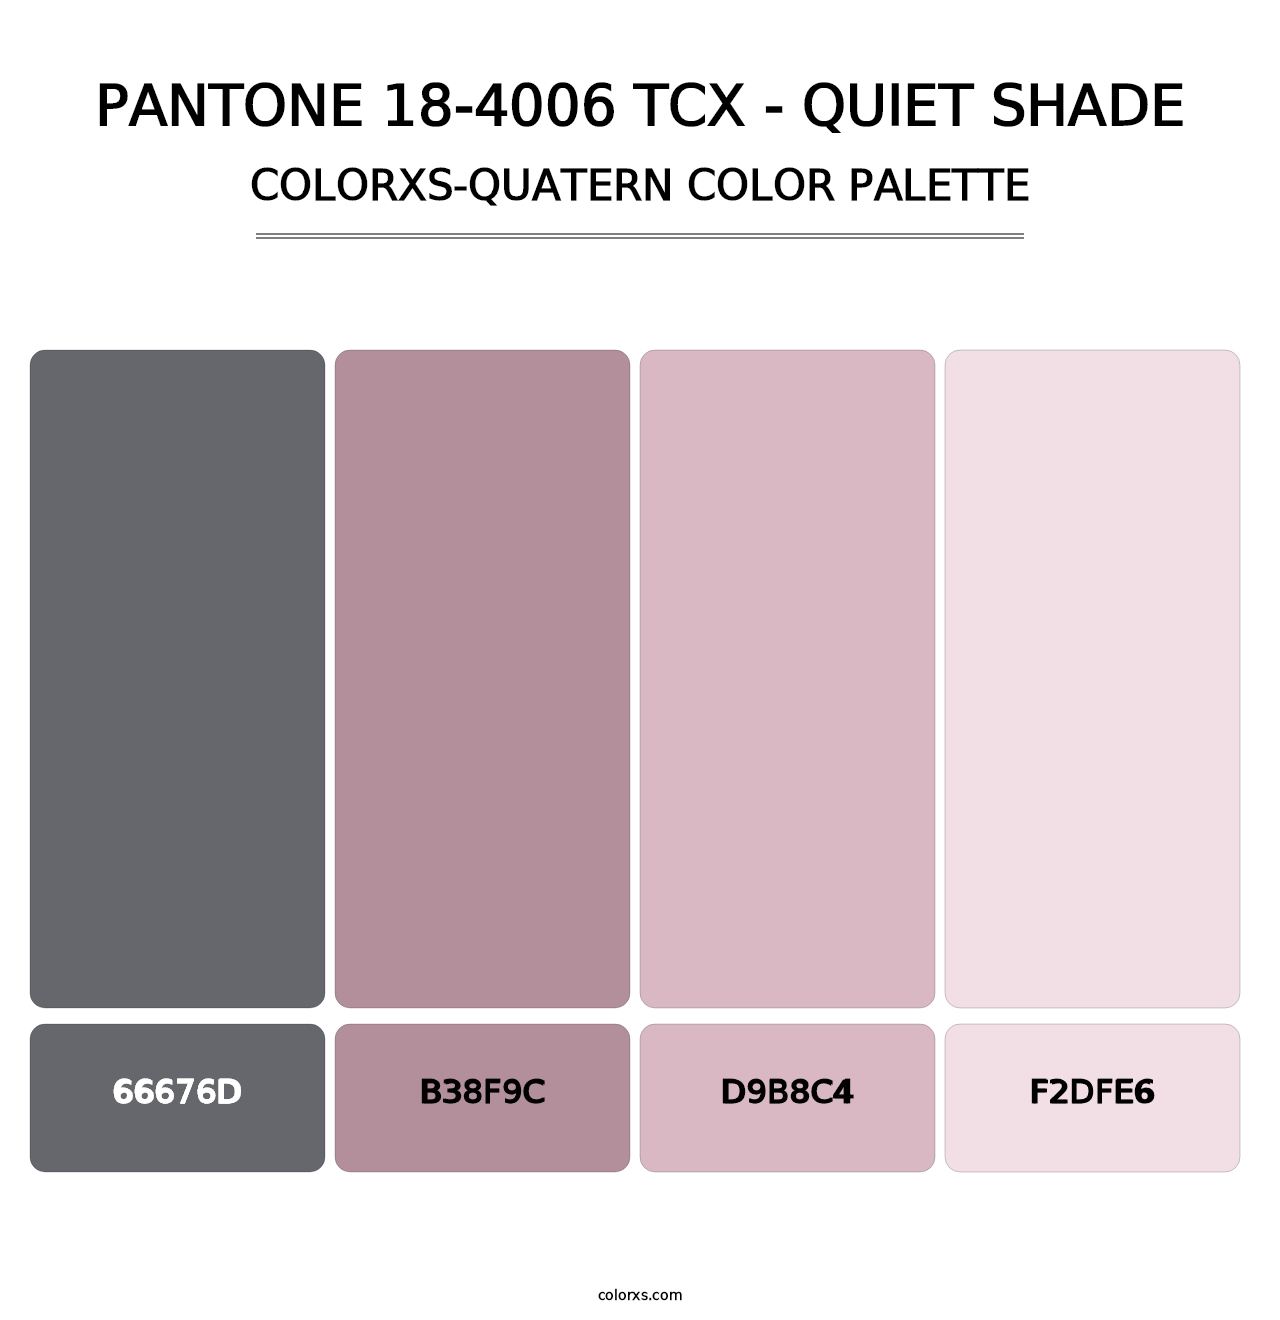 PANTONE 18-4006 TCX - Quiet Shade - Colorxs Quatern Palette